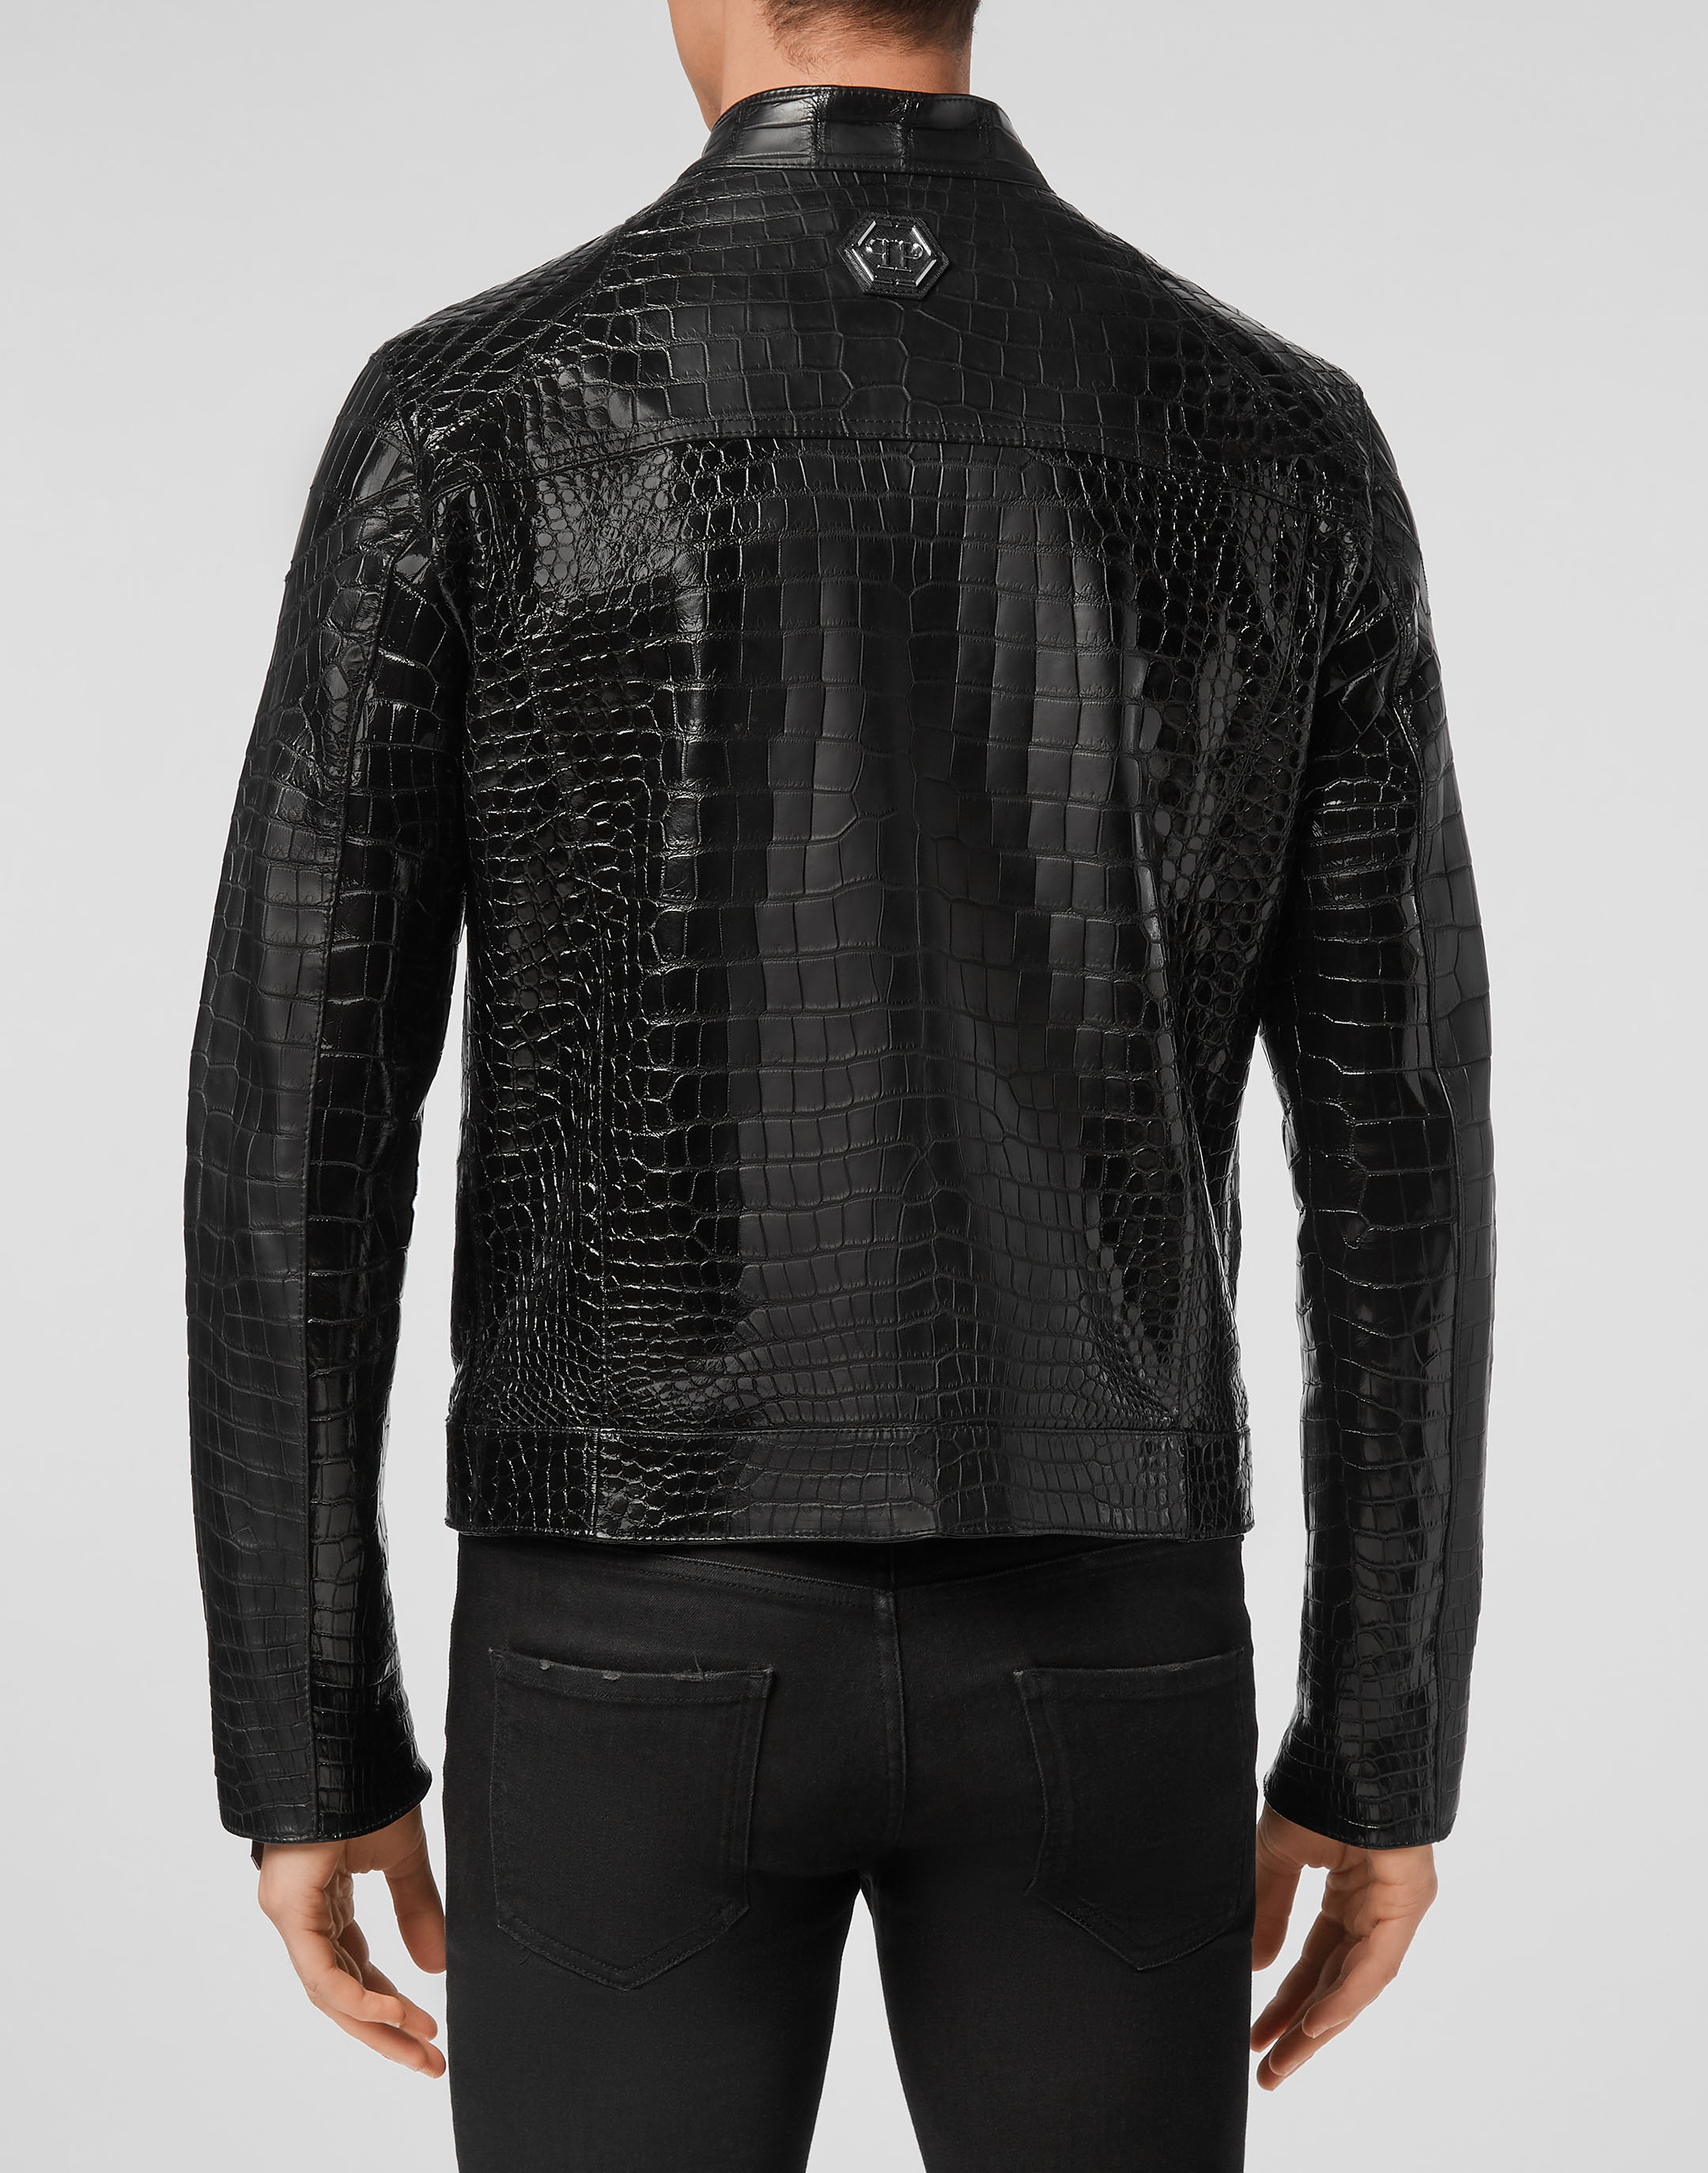 Crocodile jacket for men, luxury alligator jacket for men  Best leather  jackets, Leather jacket men style, Leather jacket men